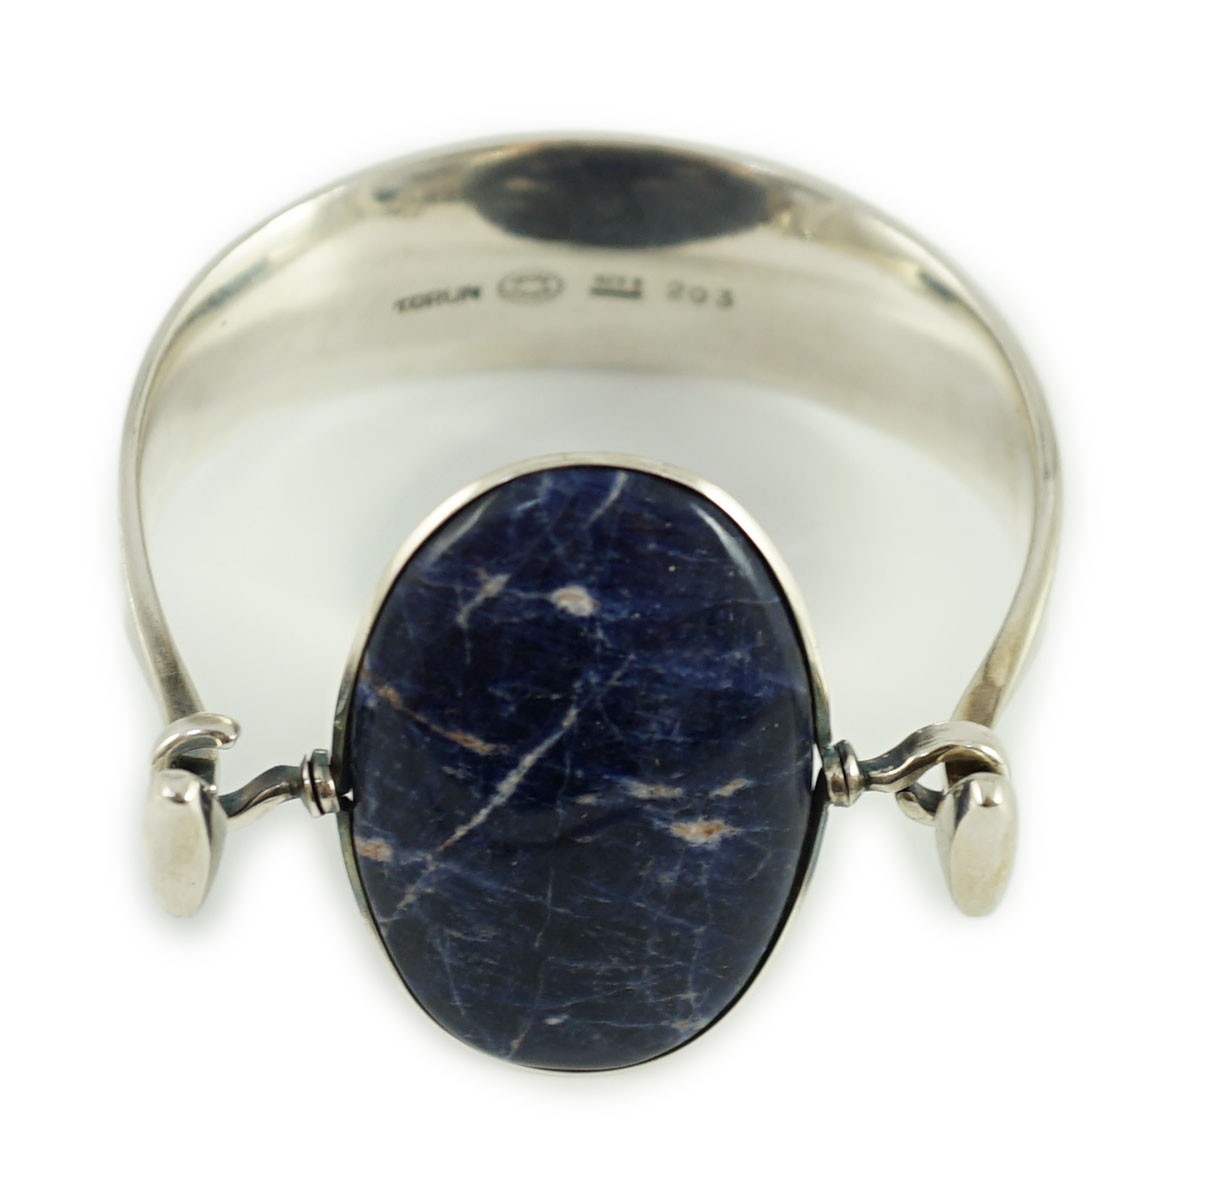 A Vivianna Torun for Georg Jensen sterling silver and oval cabochon lapis lazuli set bangle                                                                                                                                 